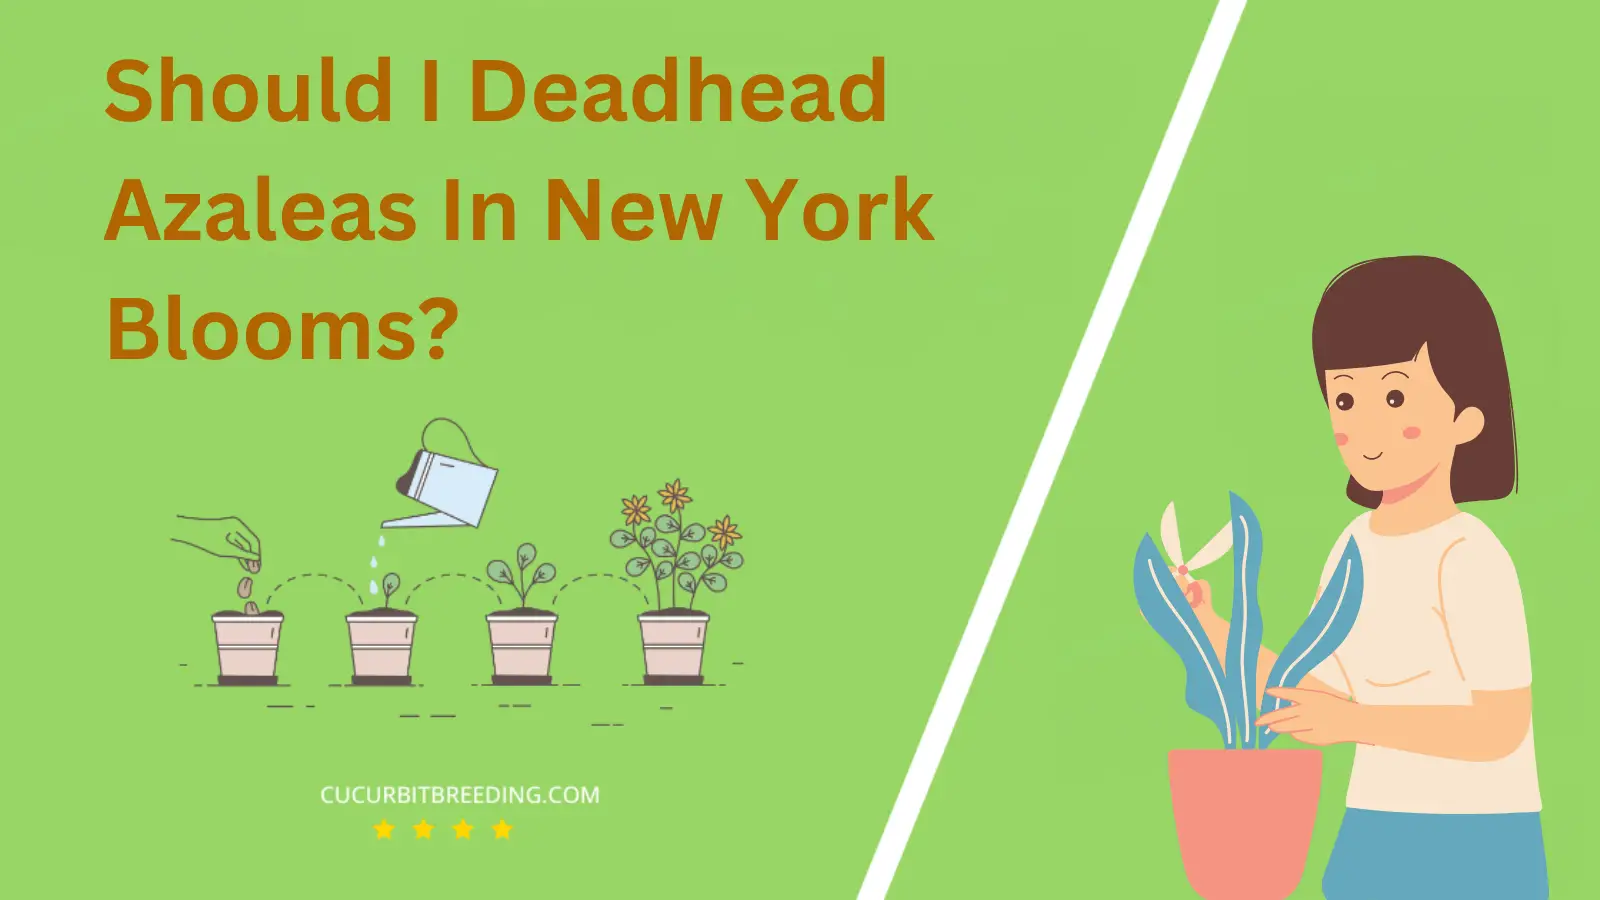 Should I Deadhead Azaleas In New York Blooms?